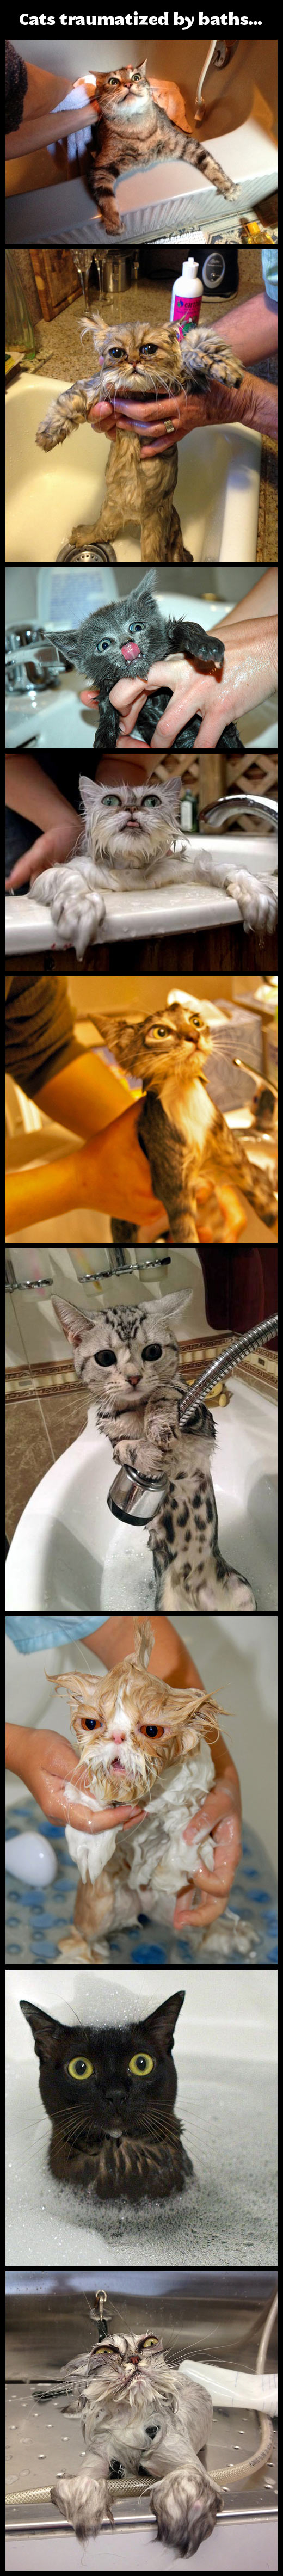 Cats traumatized by baths.